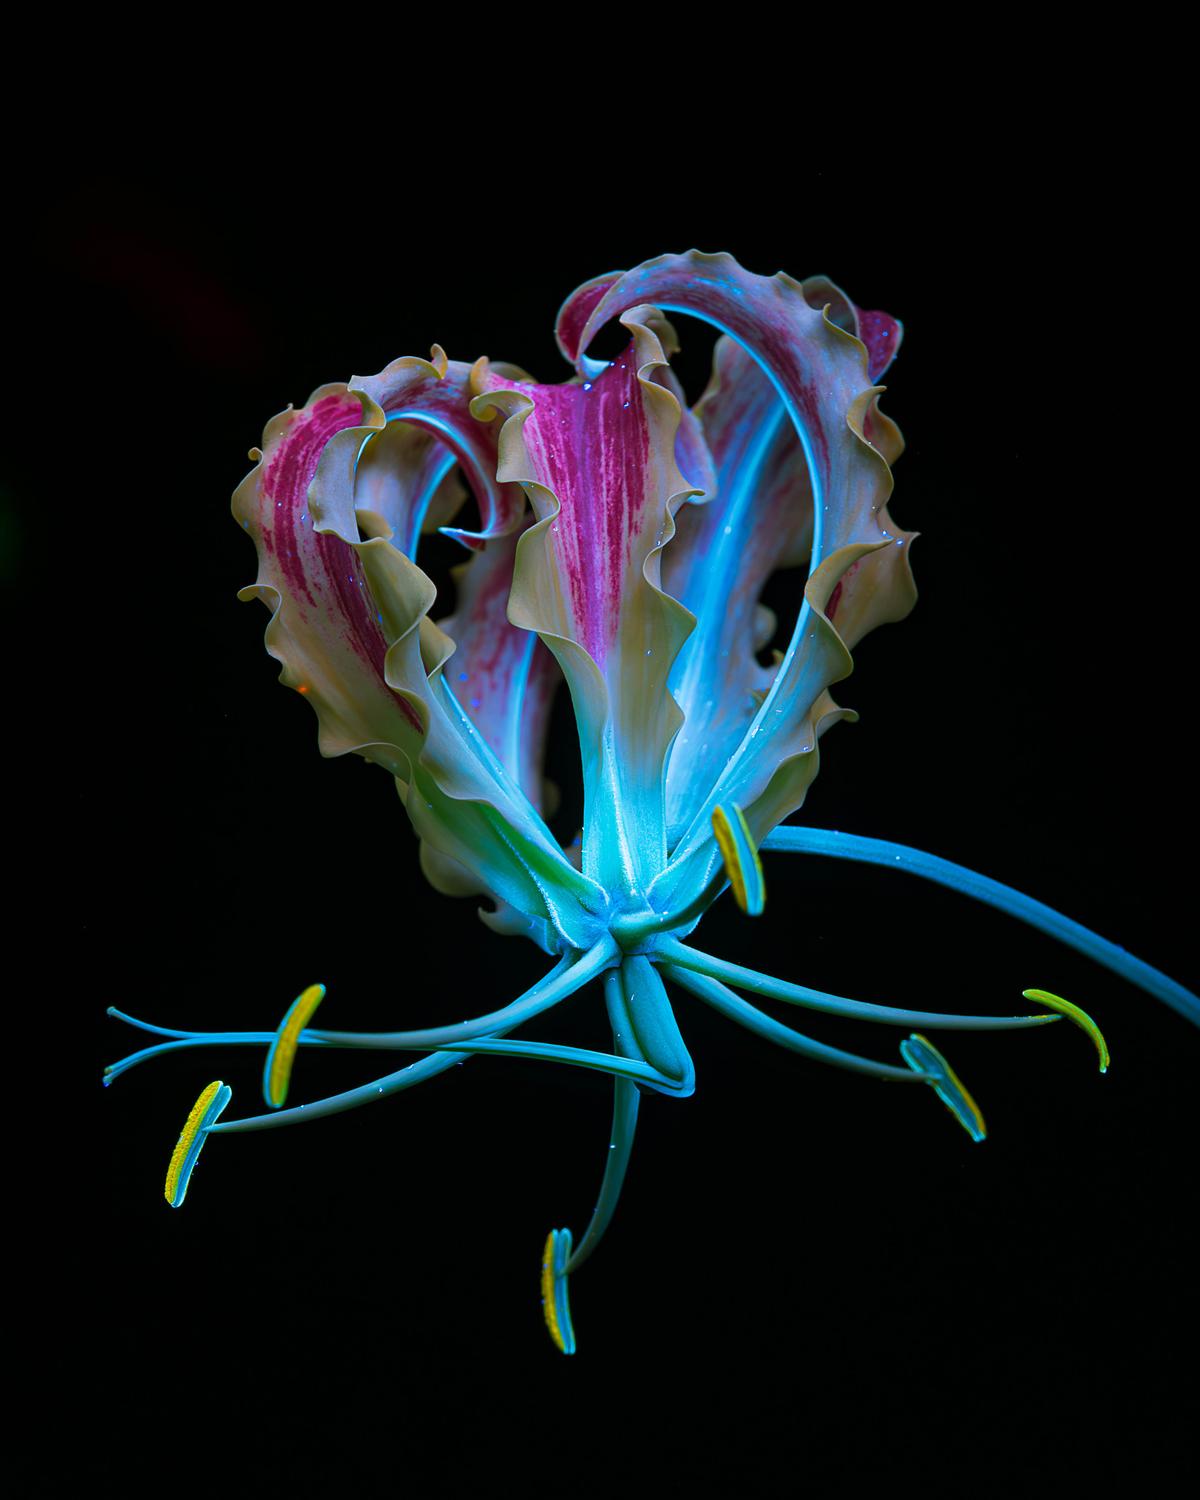 Fire lilies. (Courtesy of <a href="https://www.instagram.com/bibadesign_uvivf/">Debora Lombardi</a> and <a href="https://www.bibadesign.it">Bibadesign</a>)